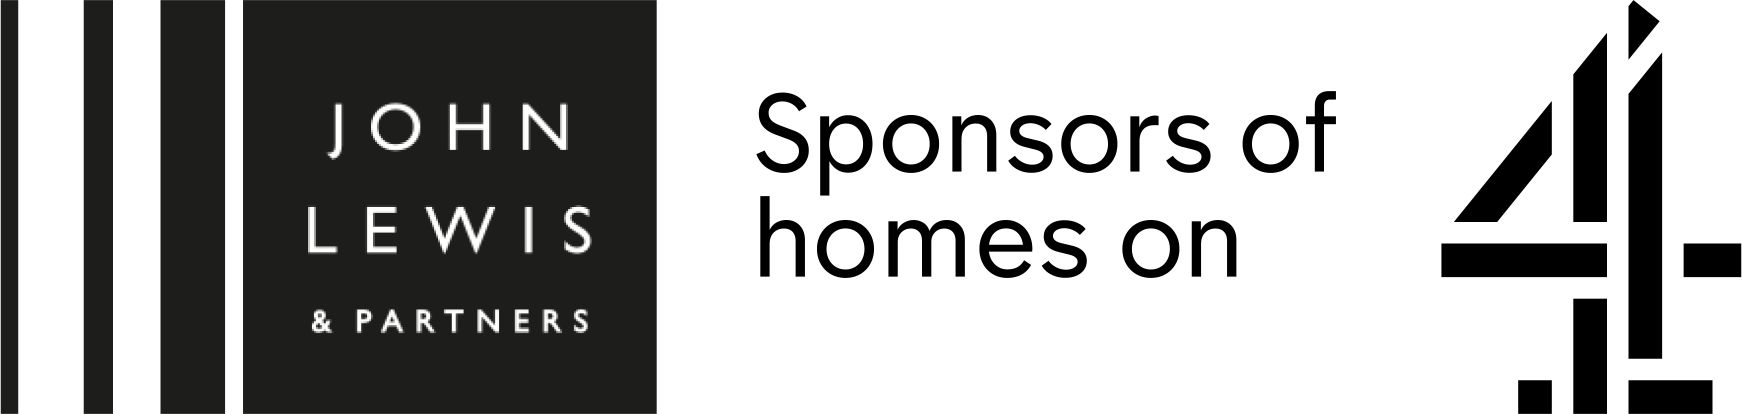 John Lewis & Partners sponsers Homes on 4